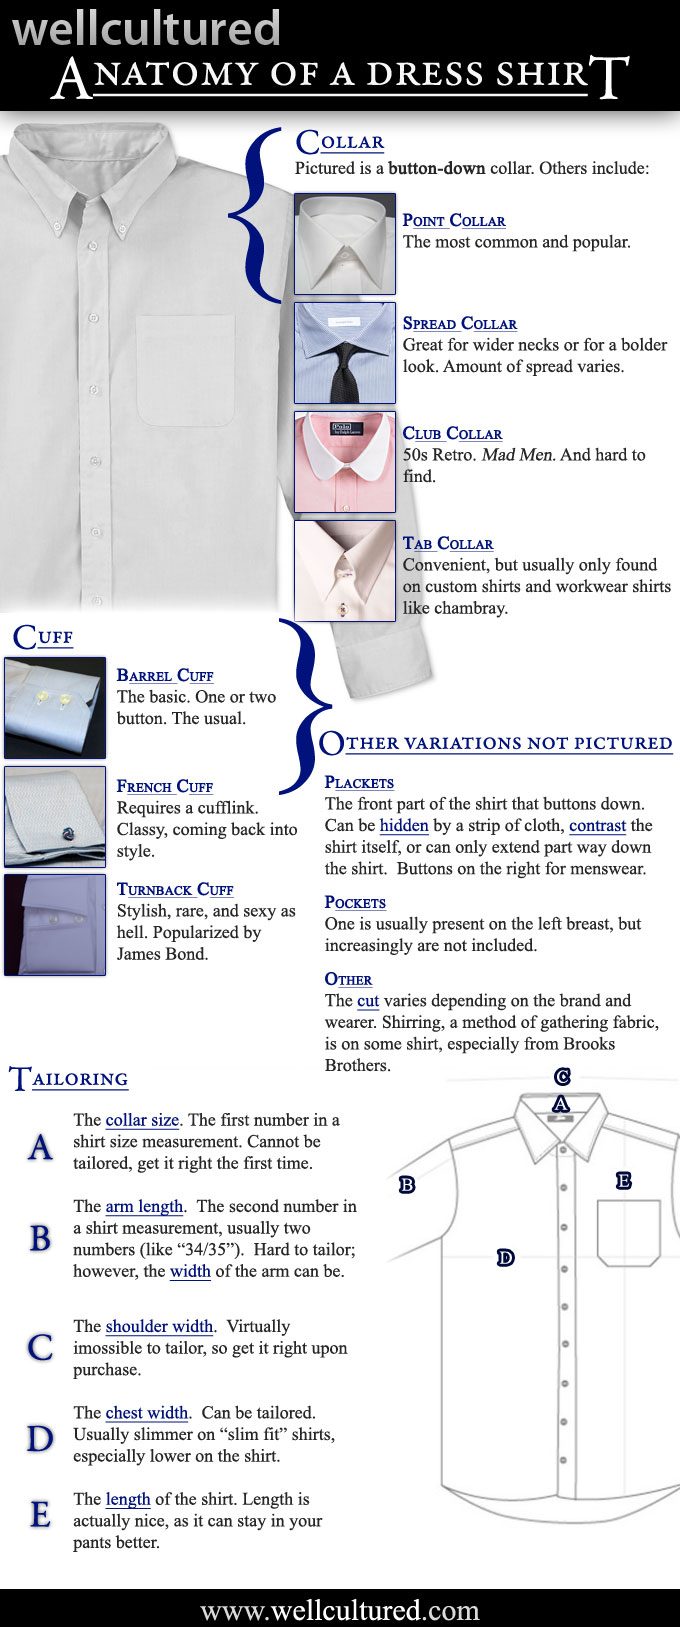 Anatomy of a Dress Shirt